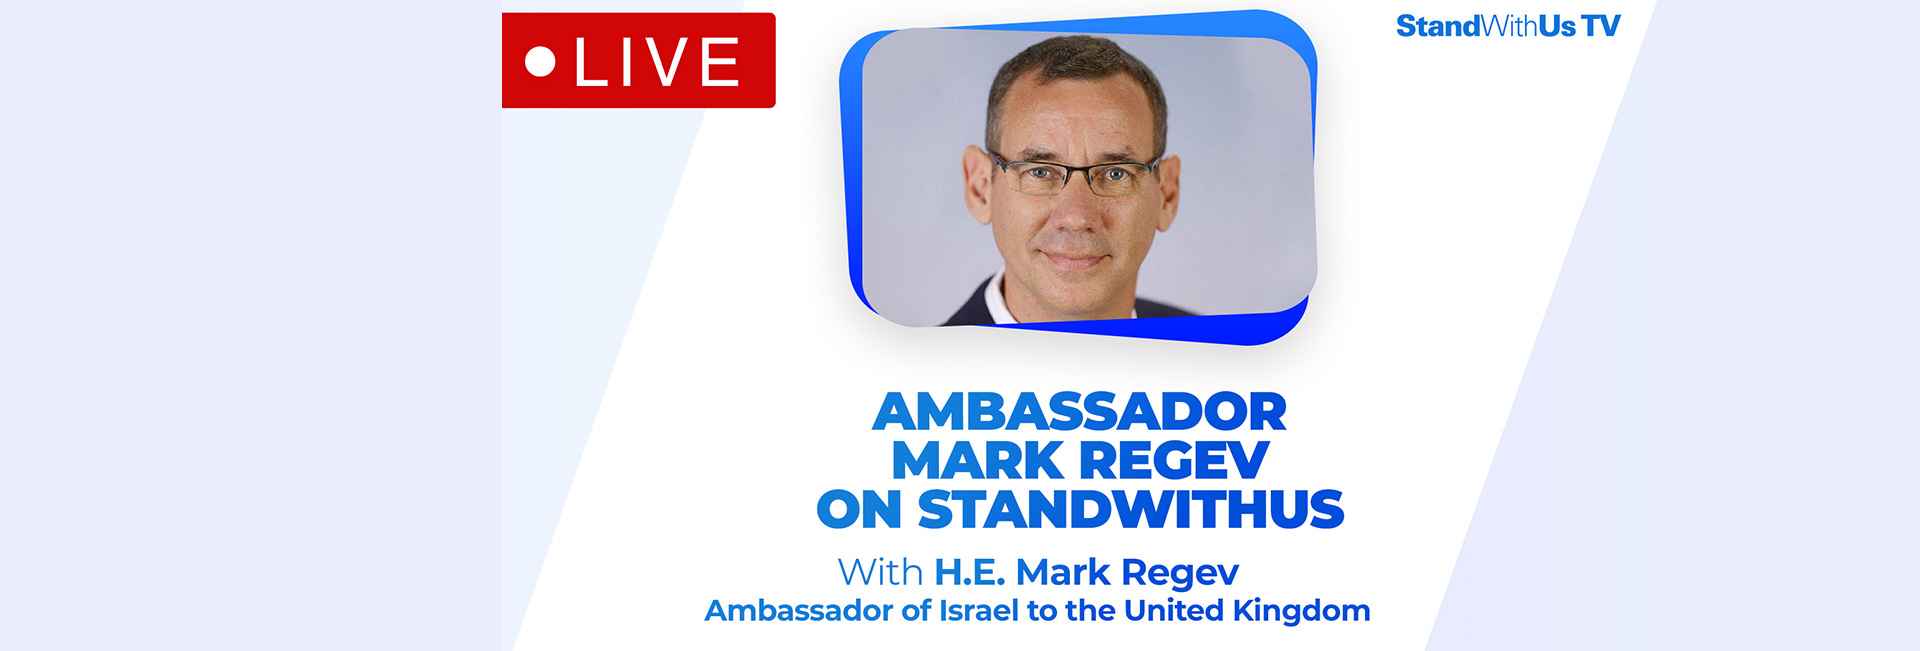 Ambassador Mark Regev on StandWithUs